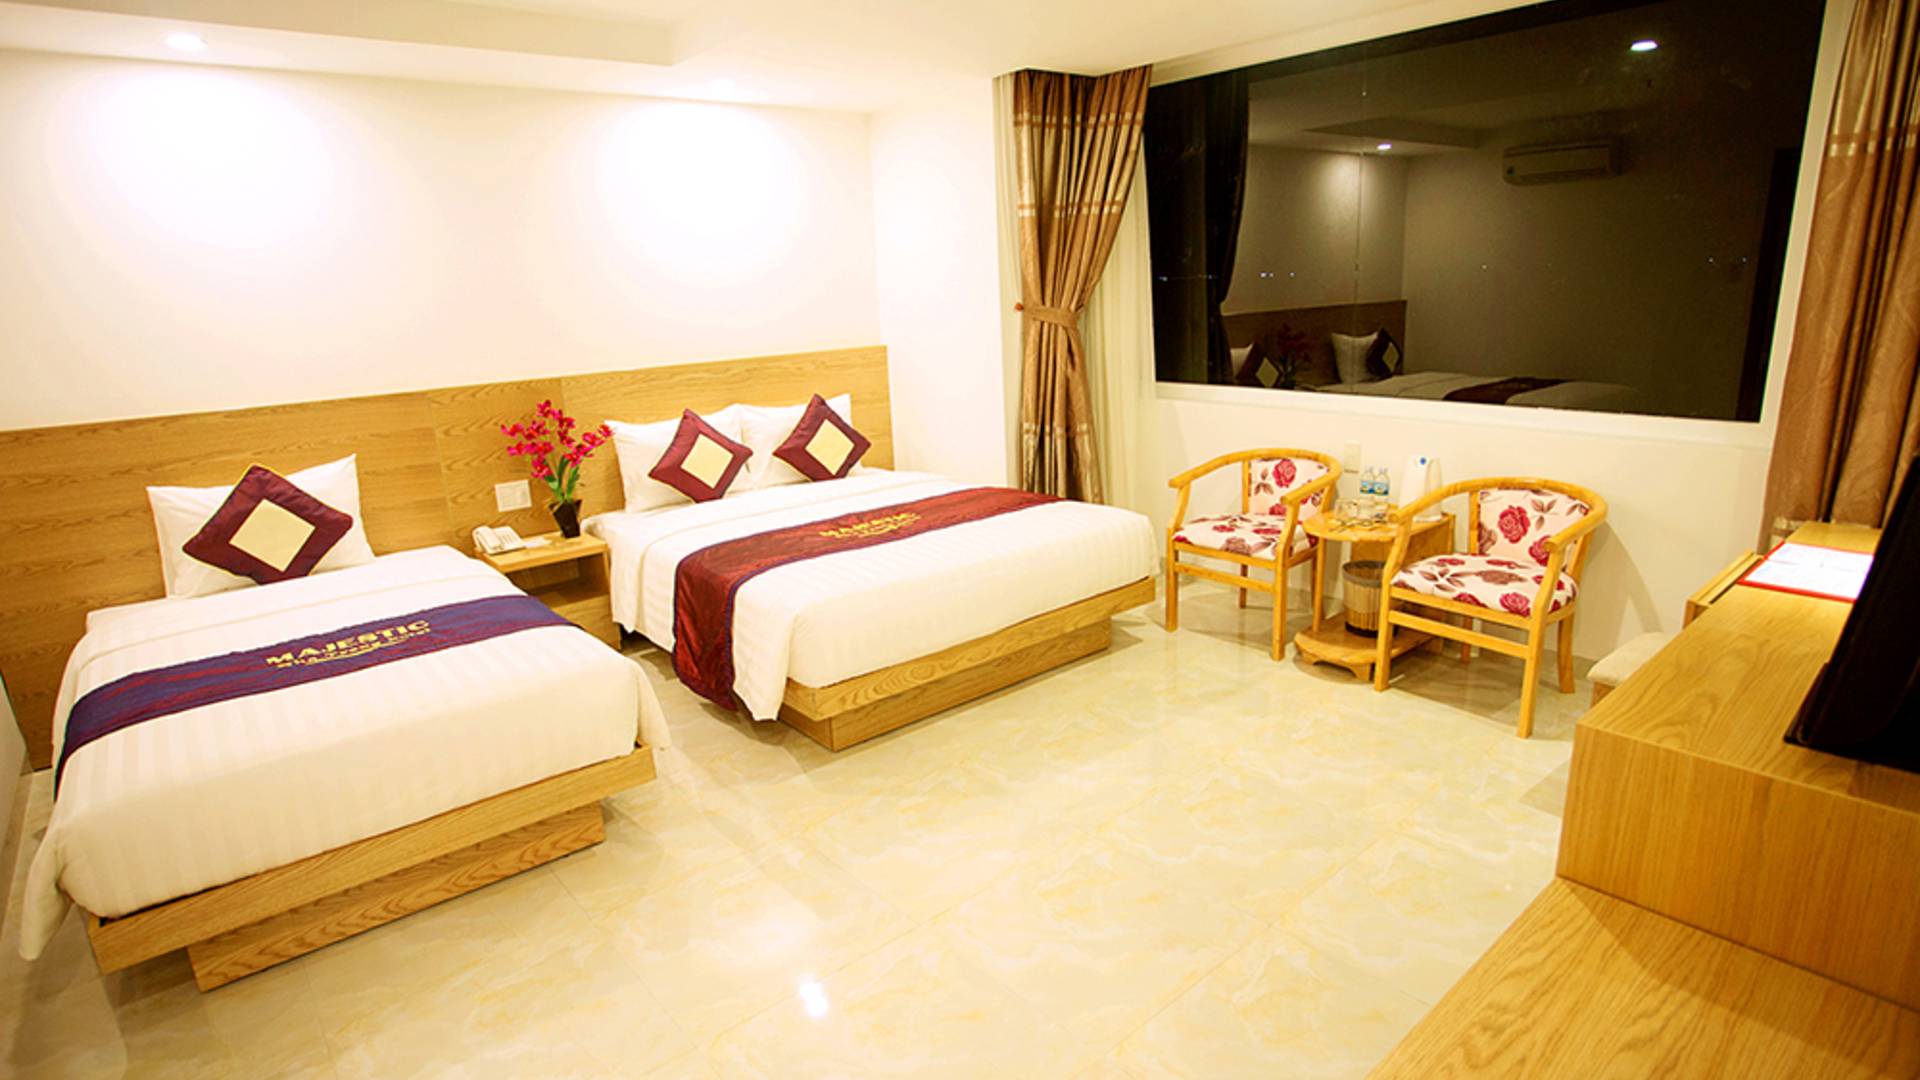 Majestic star hotel 3* туры в отель из нячанга | поиск туров онлайн | нячанг | вьетнам